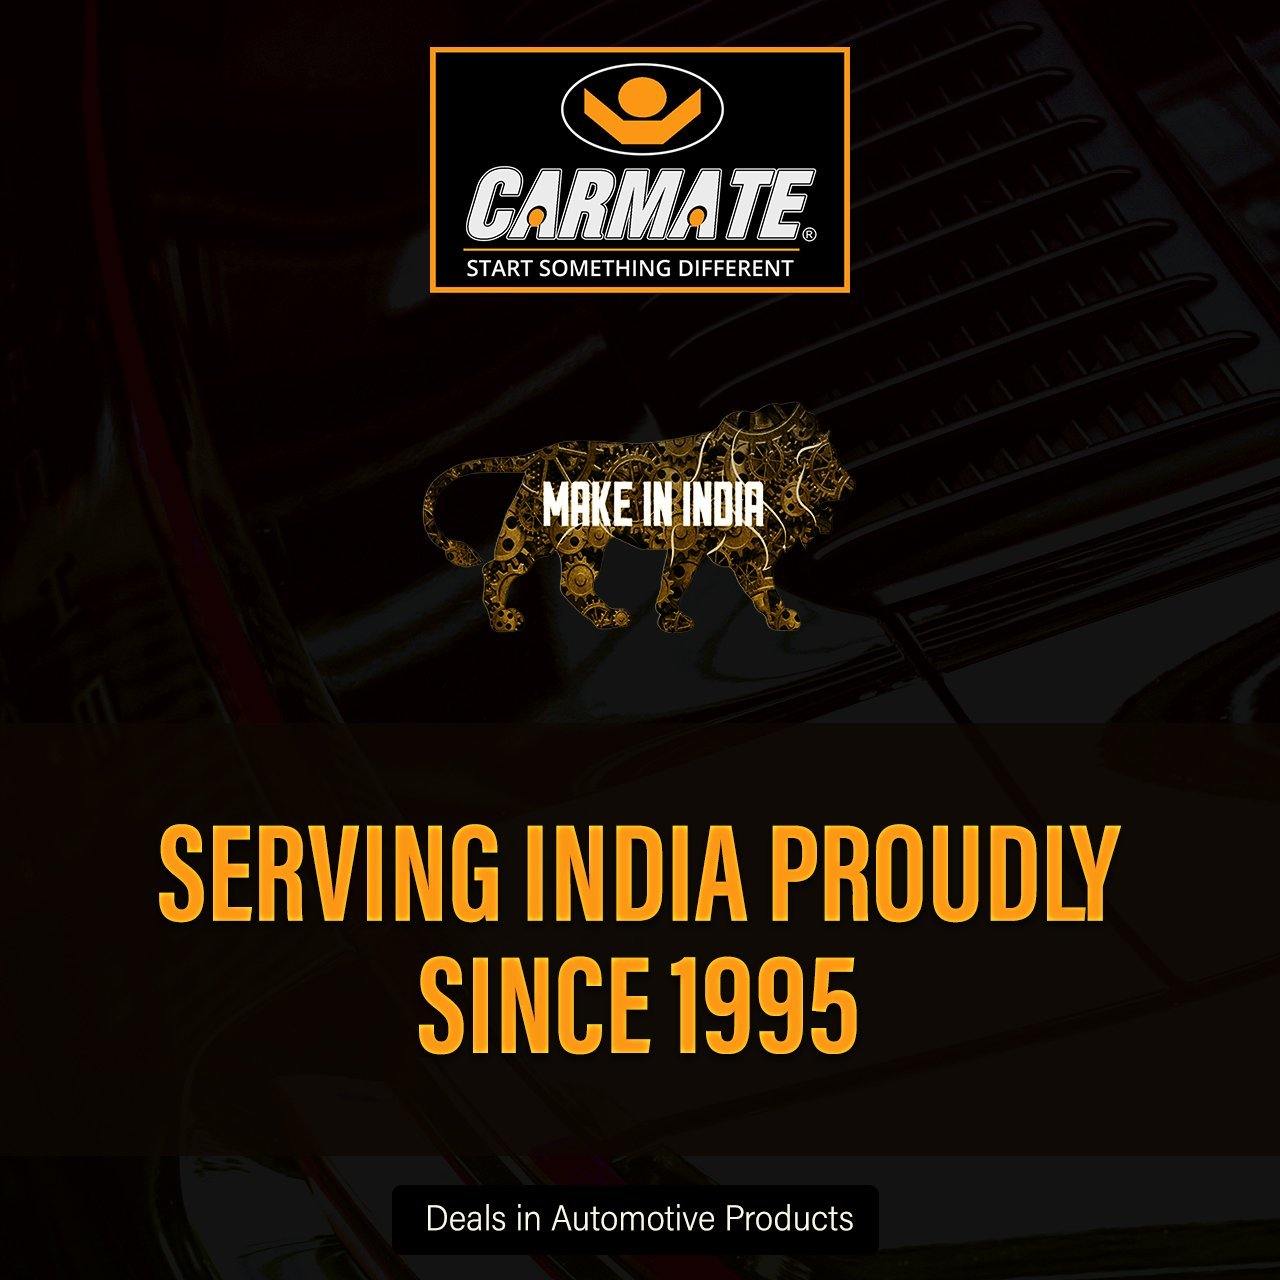 Carmate Car Steering Cover Ring Type Sporty Grip (Black and Camel) For Maruti - Versa (Medium) - CARMATE®